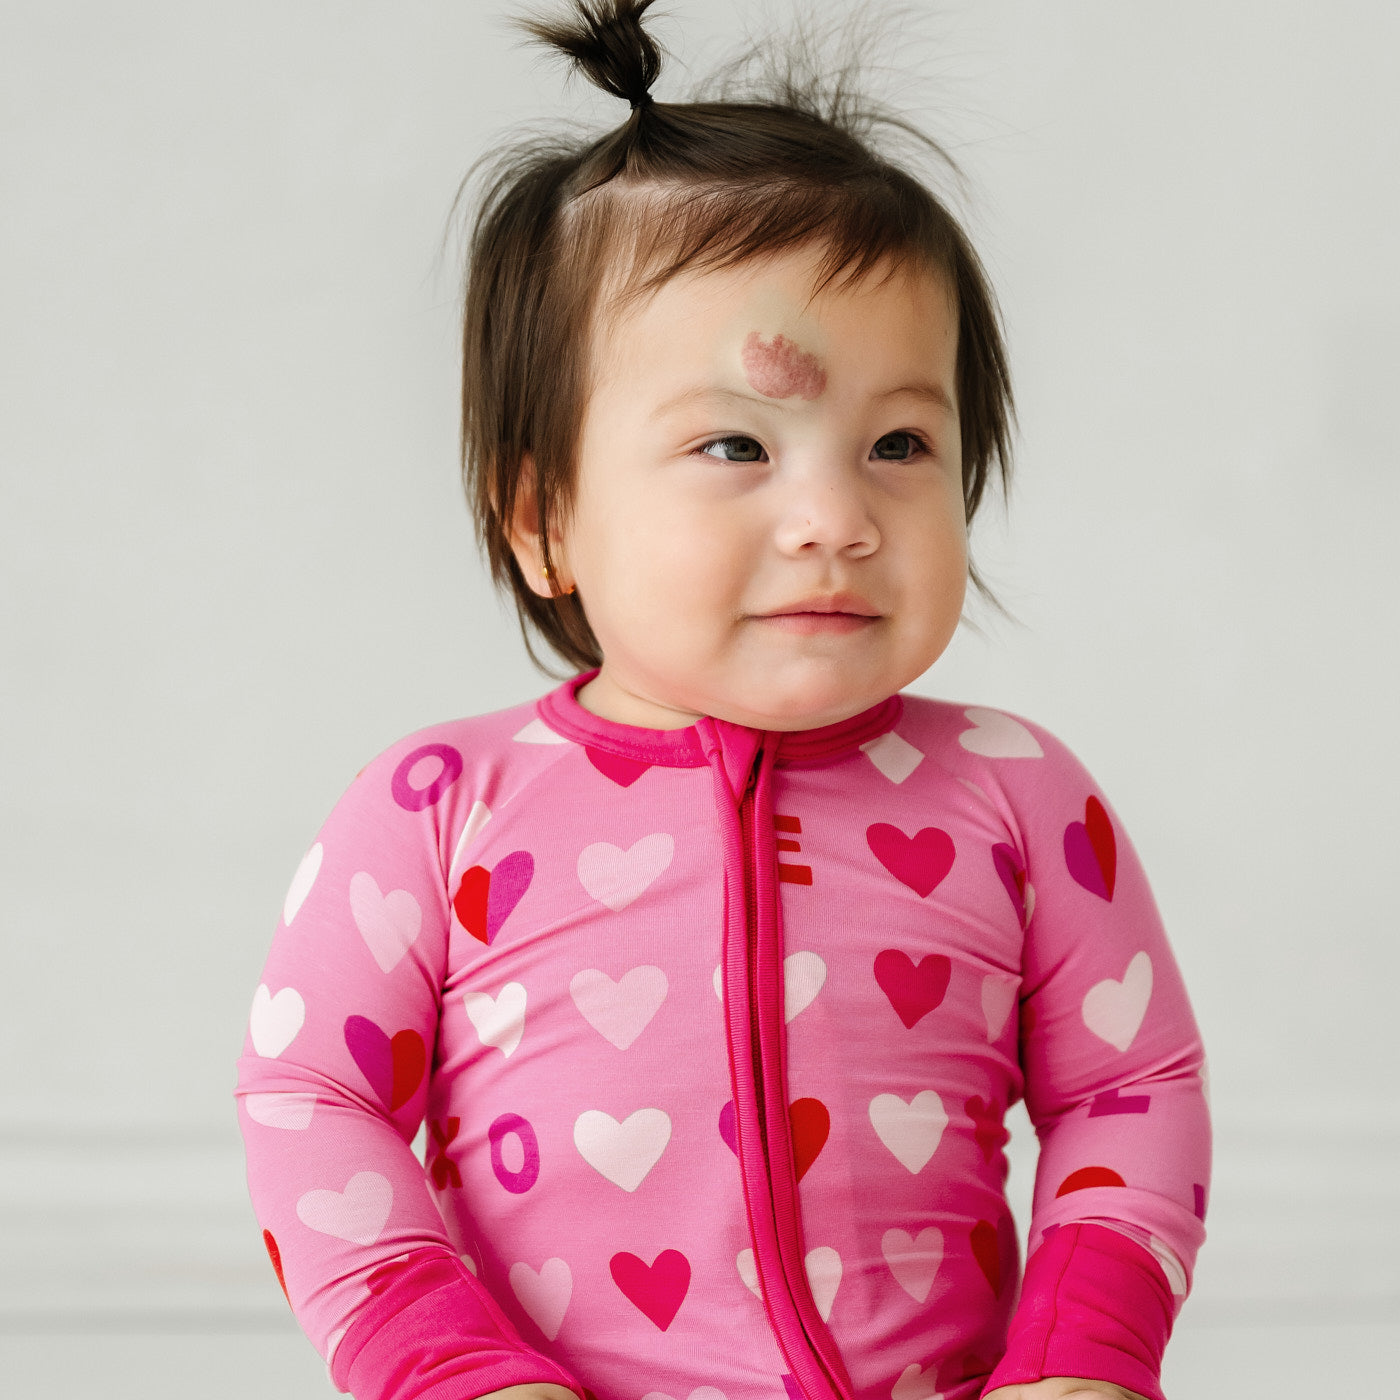 Close up image of a child sitting wearing a Pink XOXO zippy